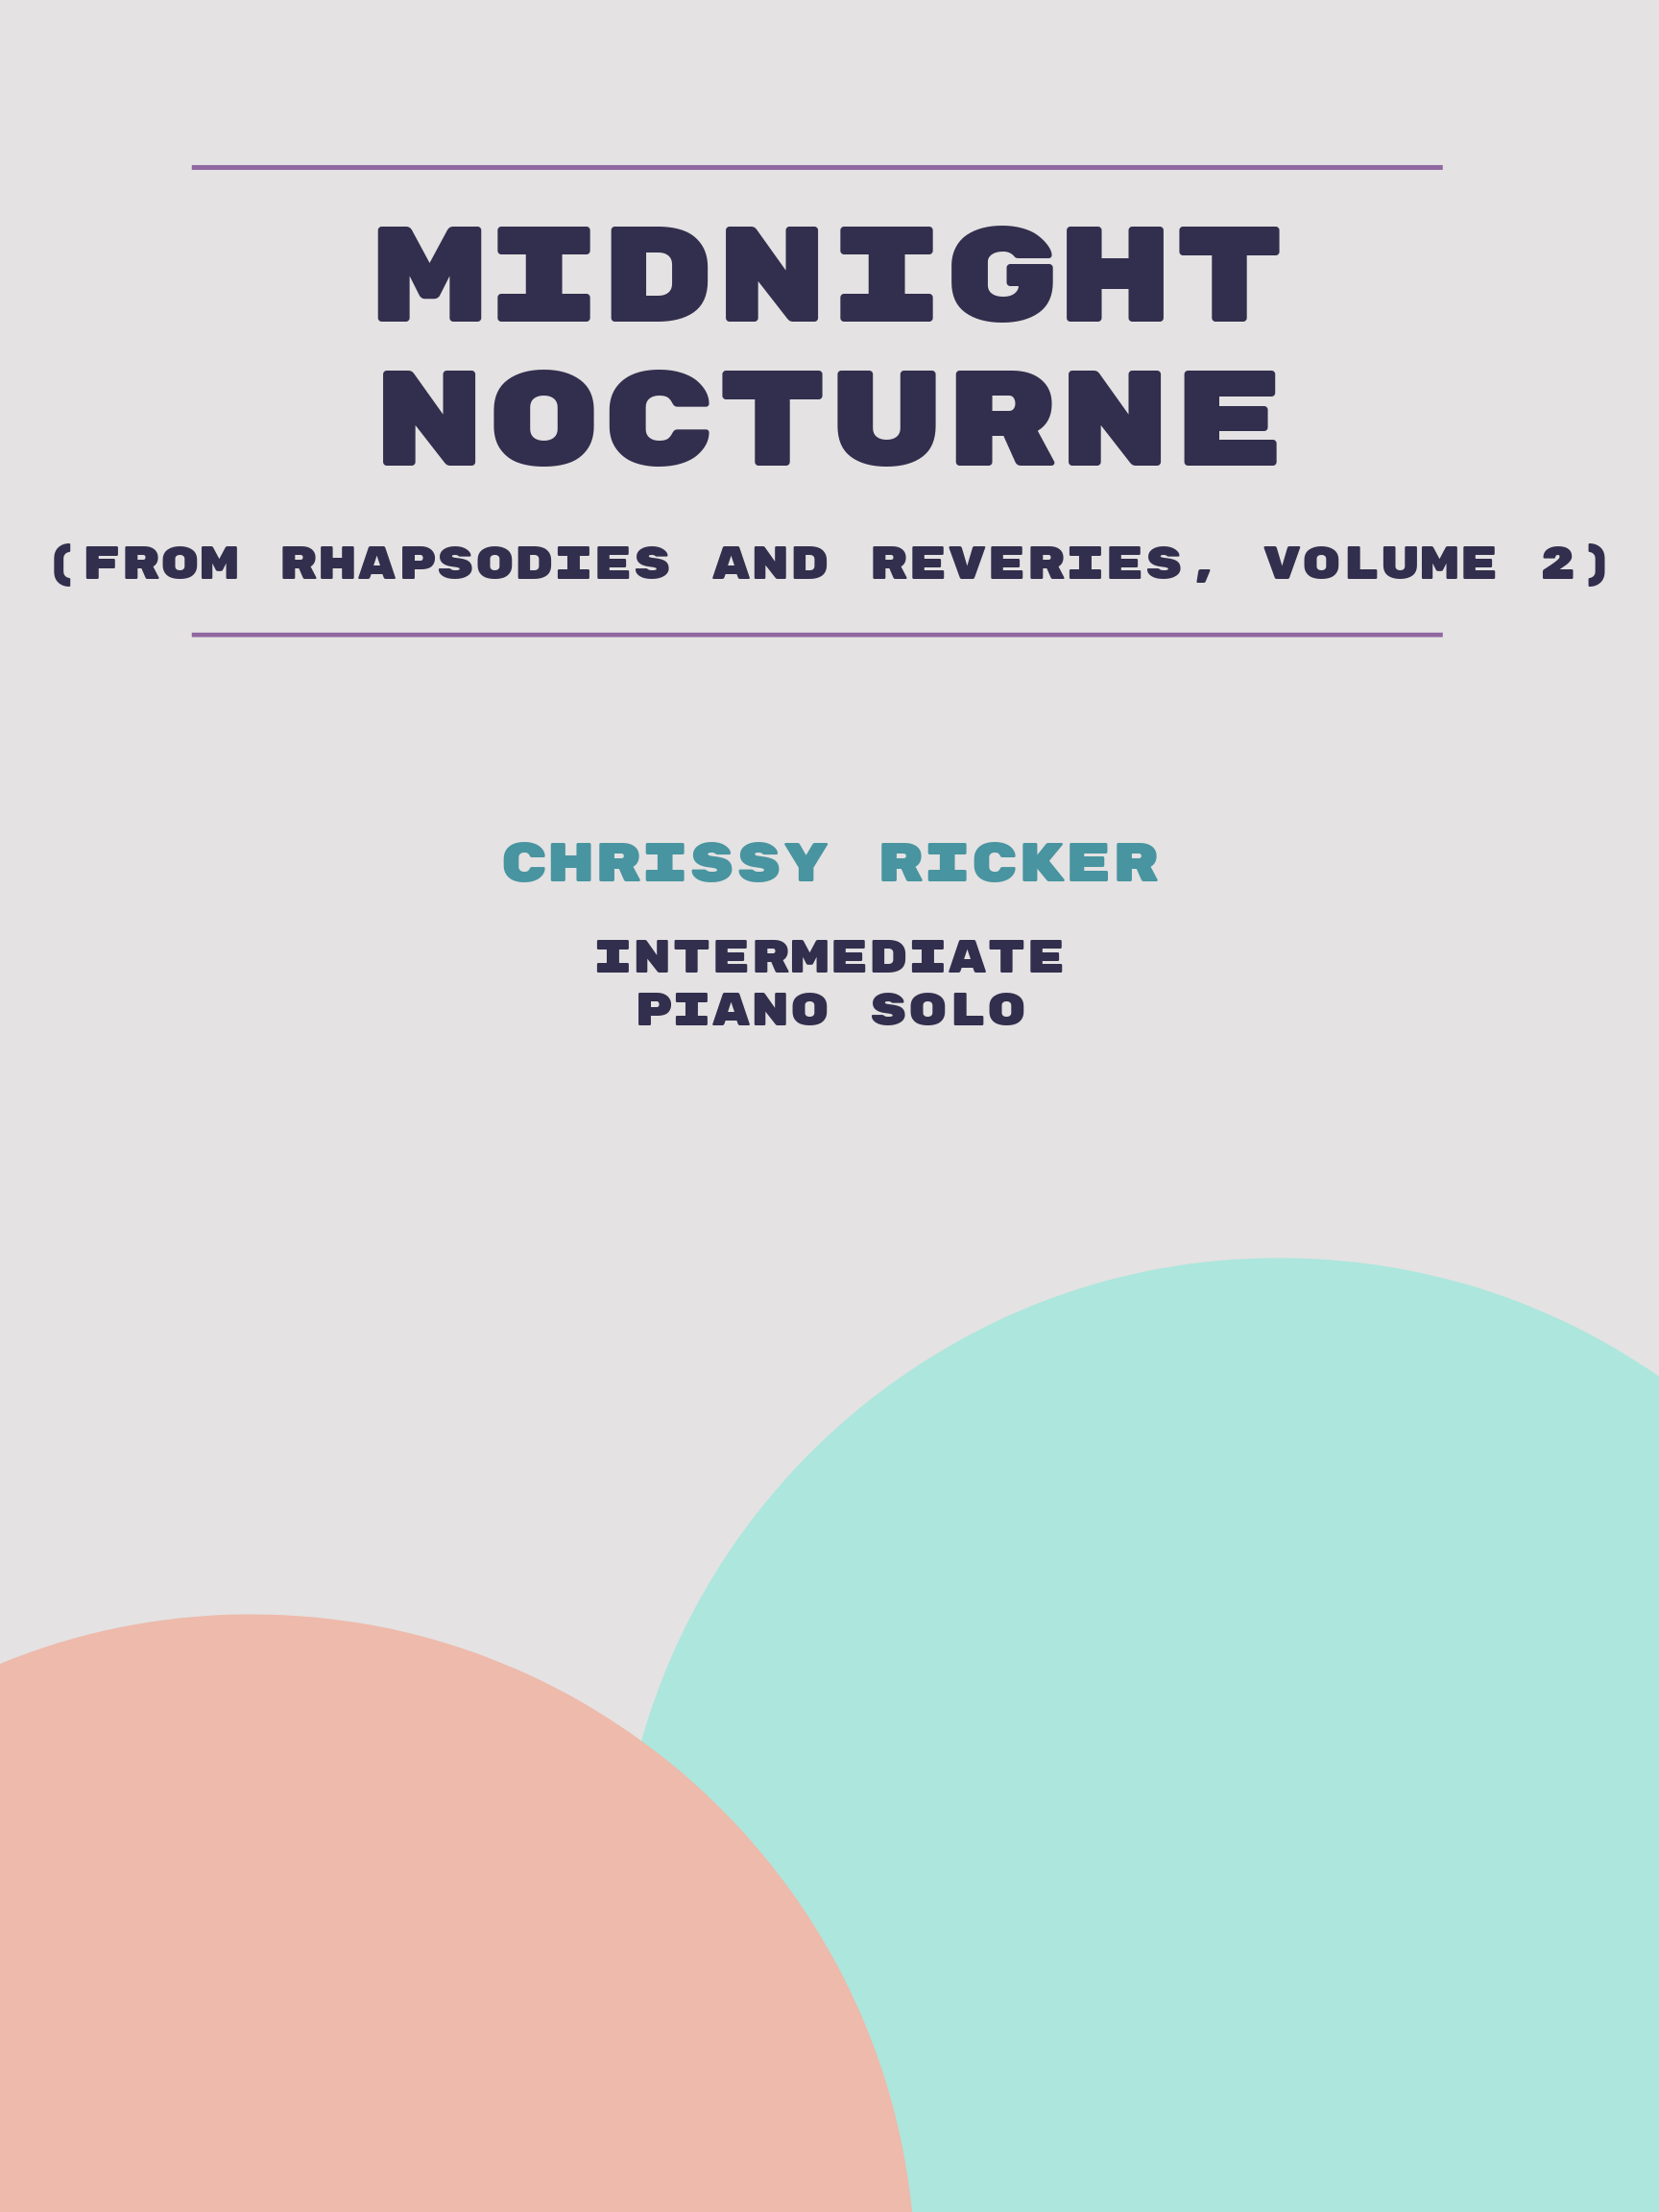 Midnight Nocturne by Chrissy Ricker